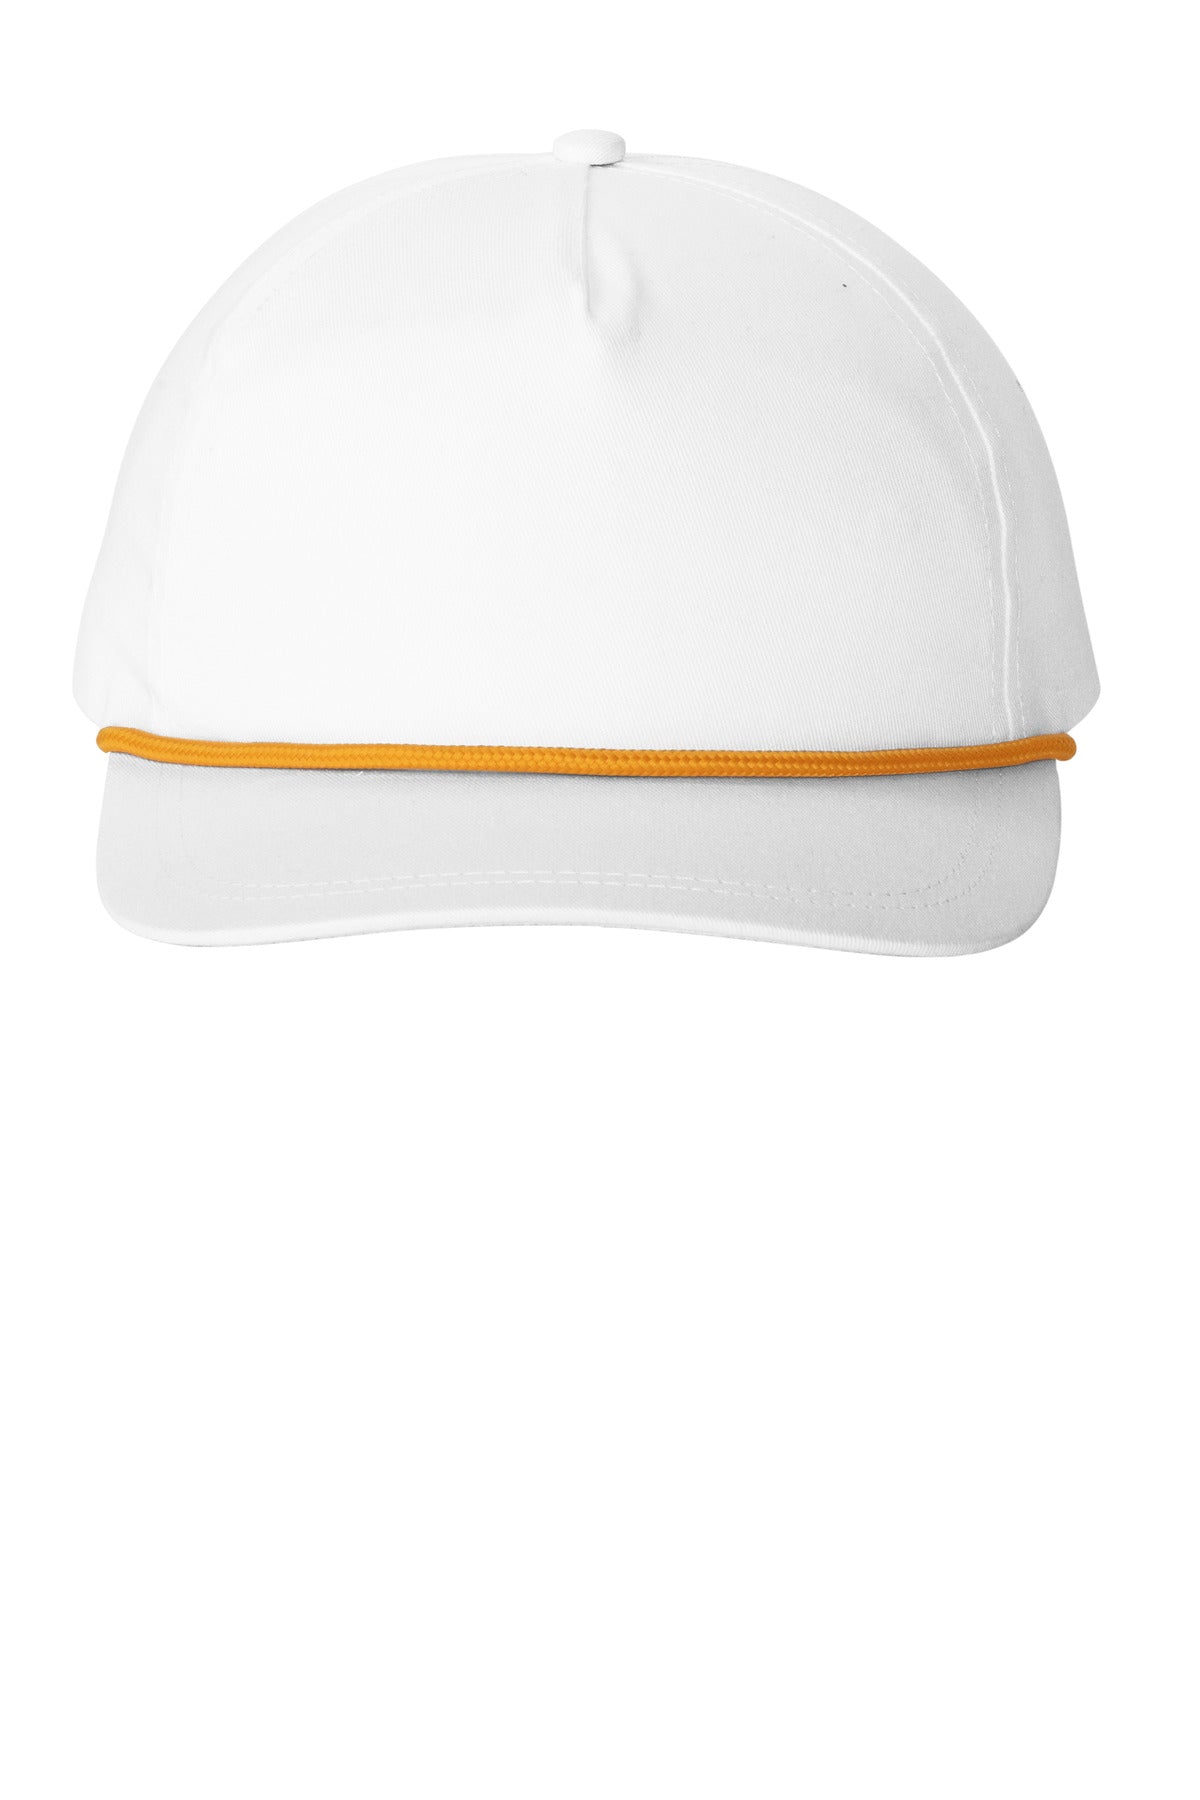 Caps White/ Athletic Gold OSFA Port Authority